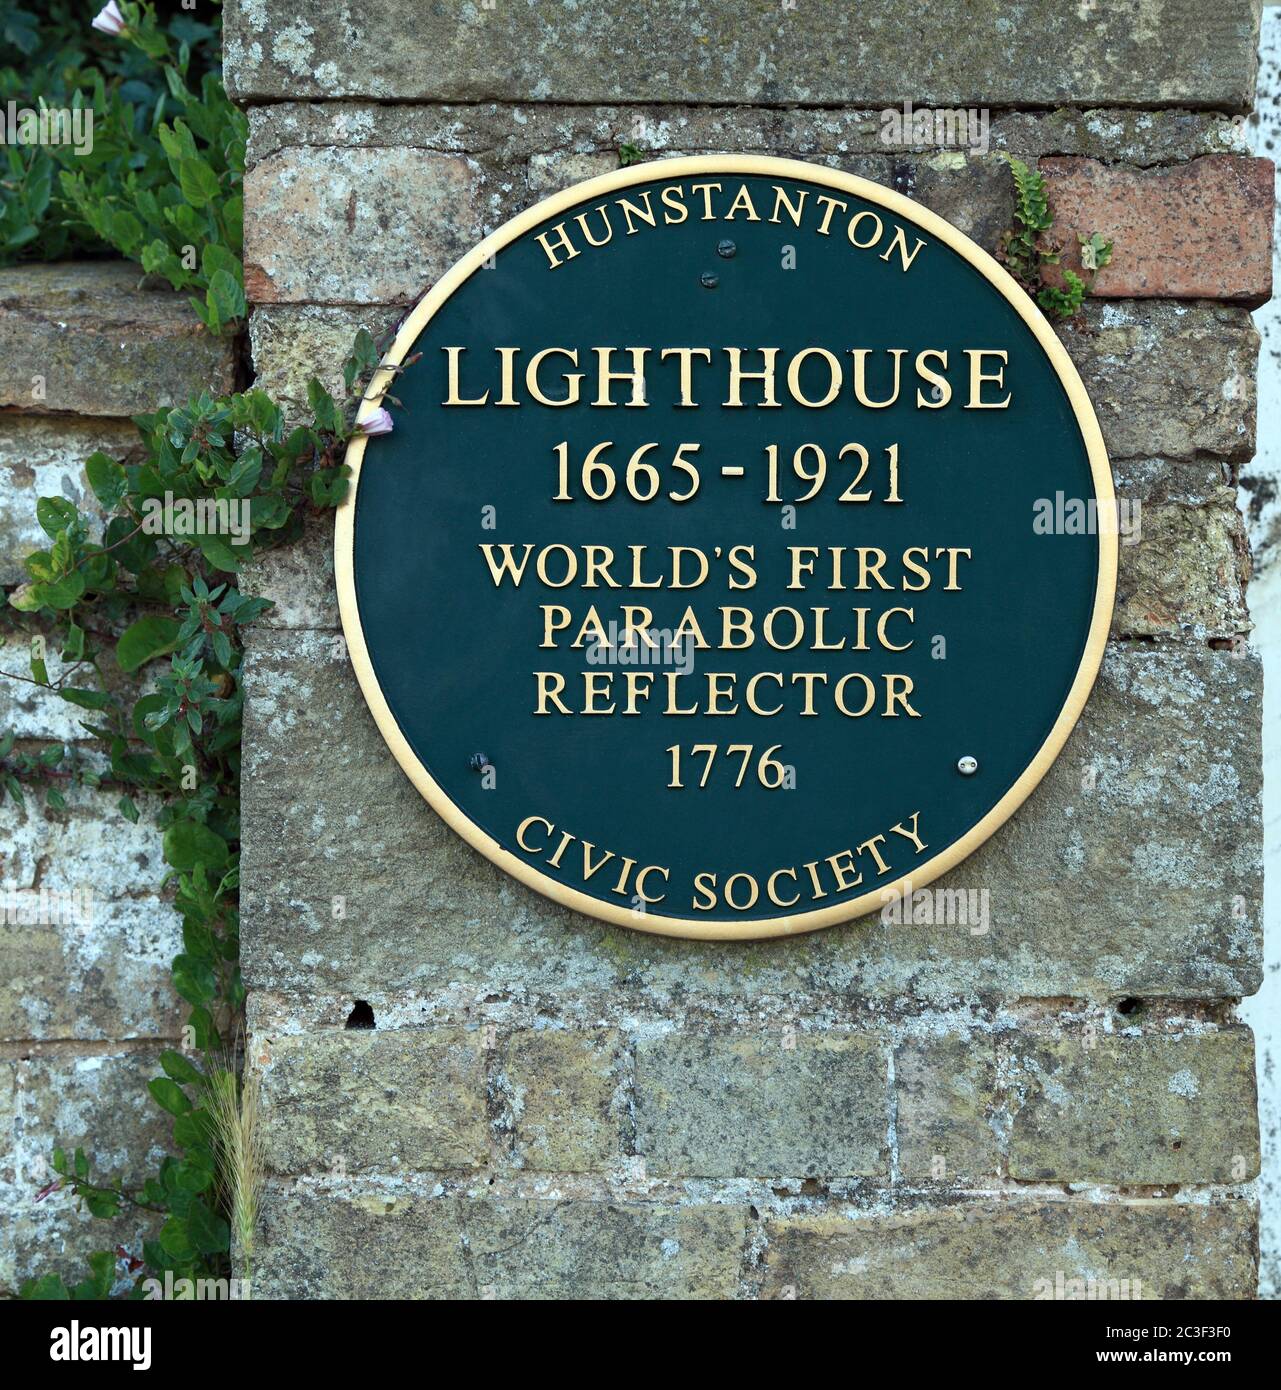 Hunstanton Lighthouse, Civic Society sign, Norfolk, England, UK Stock Photo